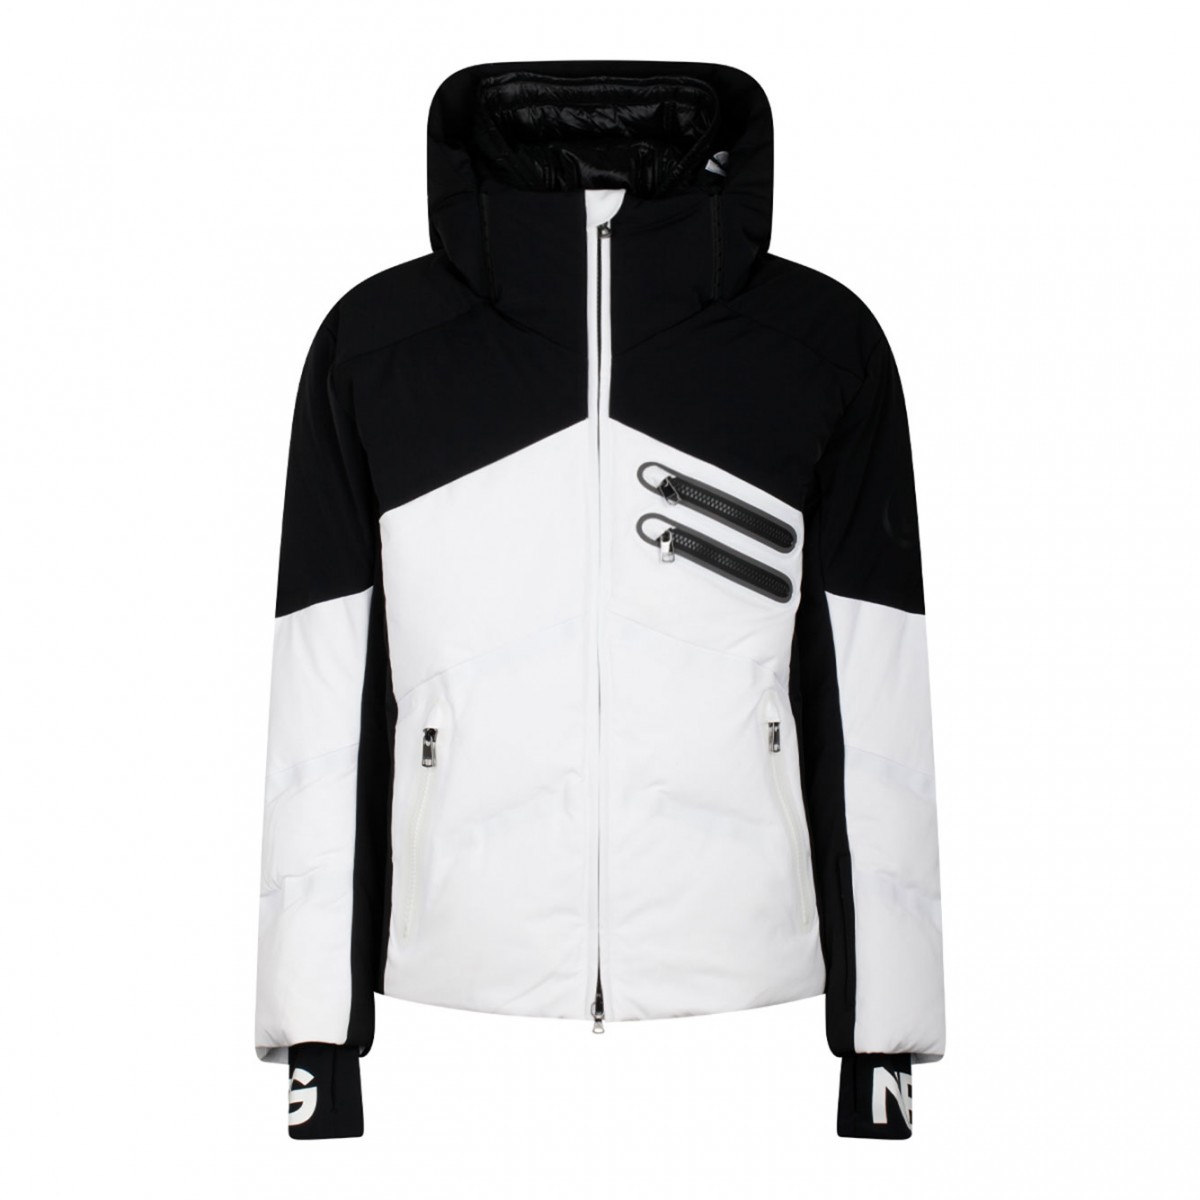 White and Black Ski Jacket